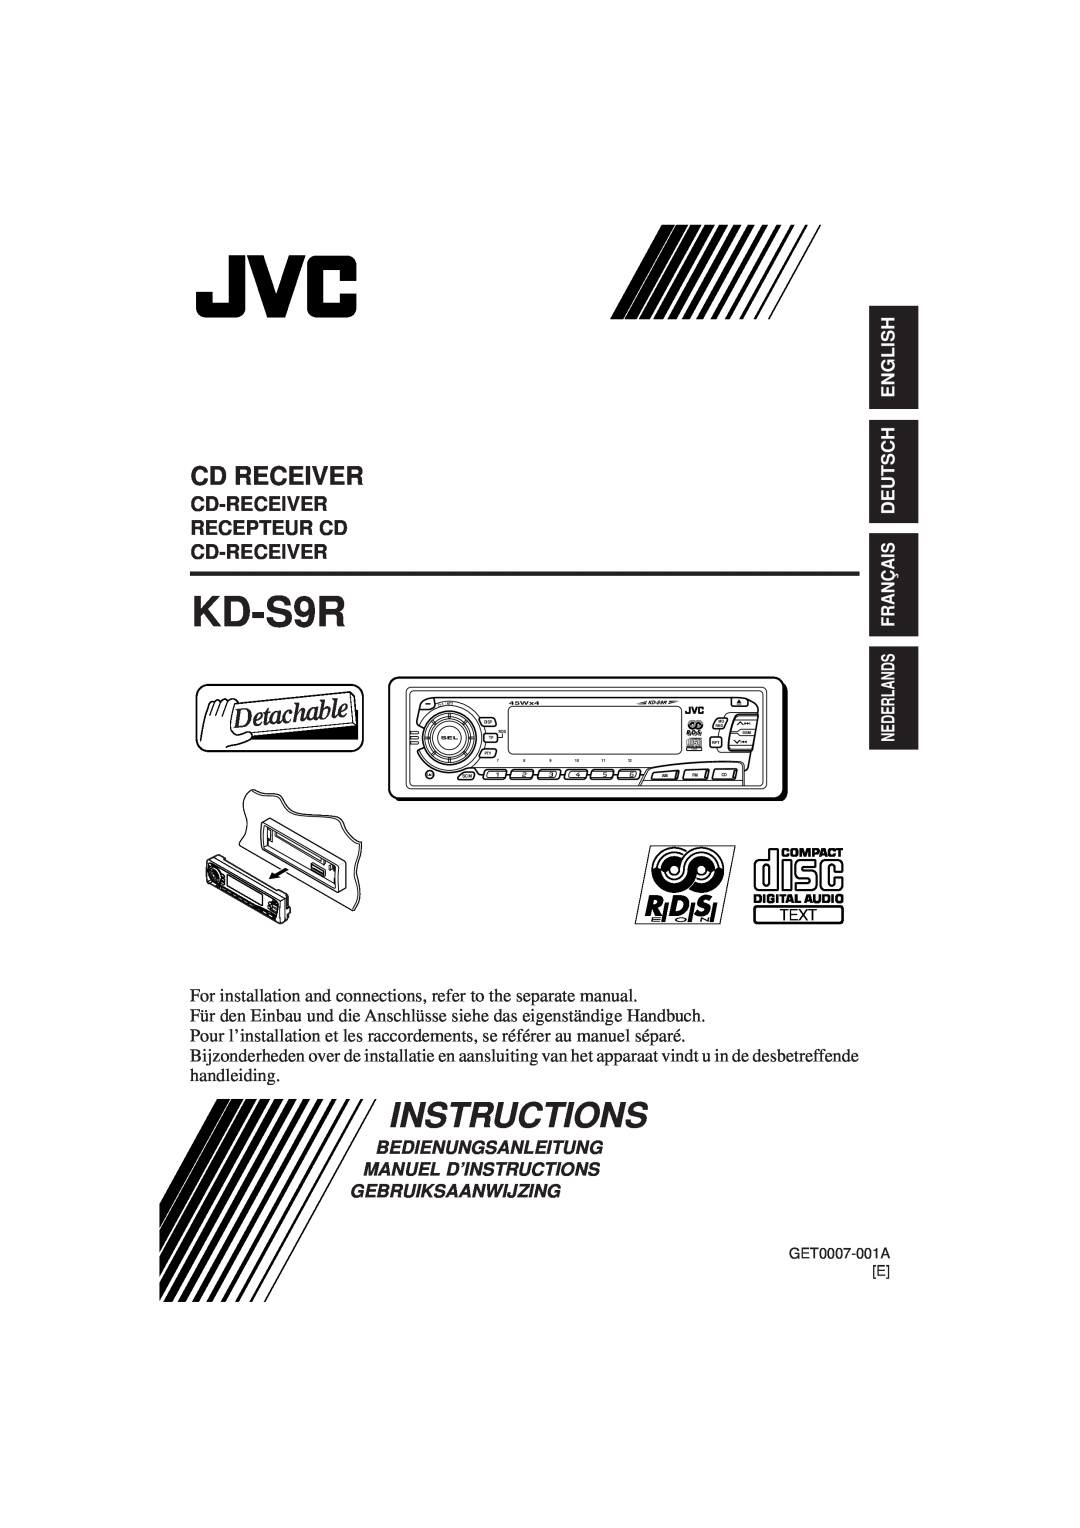 JVC KD-S9R manual Cd Receiver, Cd-Receiver Recepteur Cd Cd-Receiver, Nederlands Français Deutsch English, Instructions 